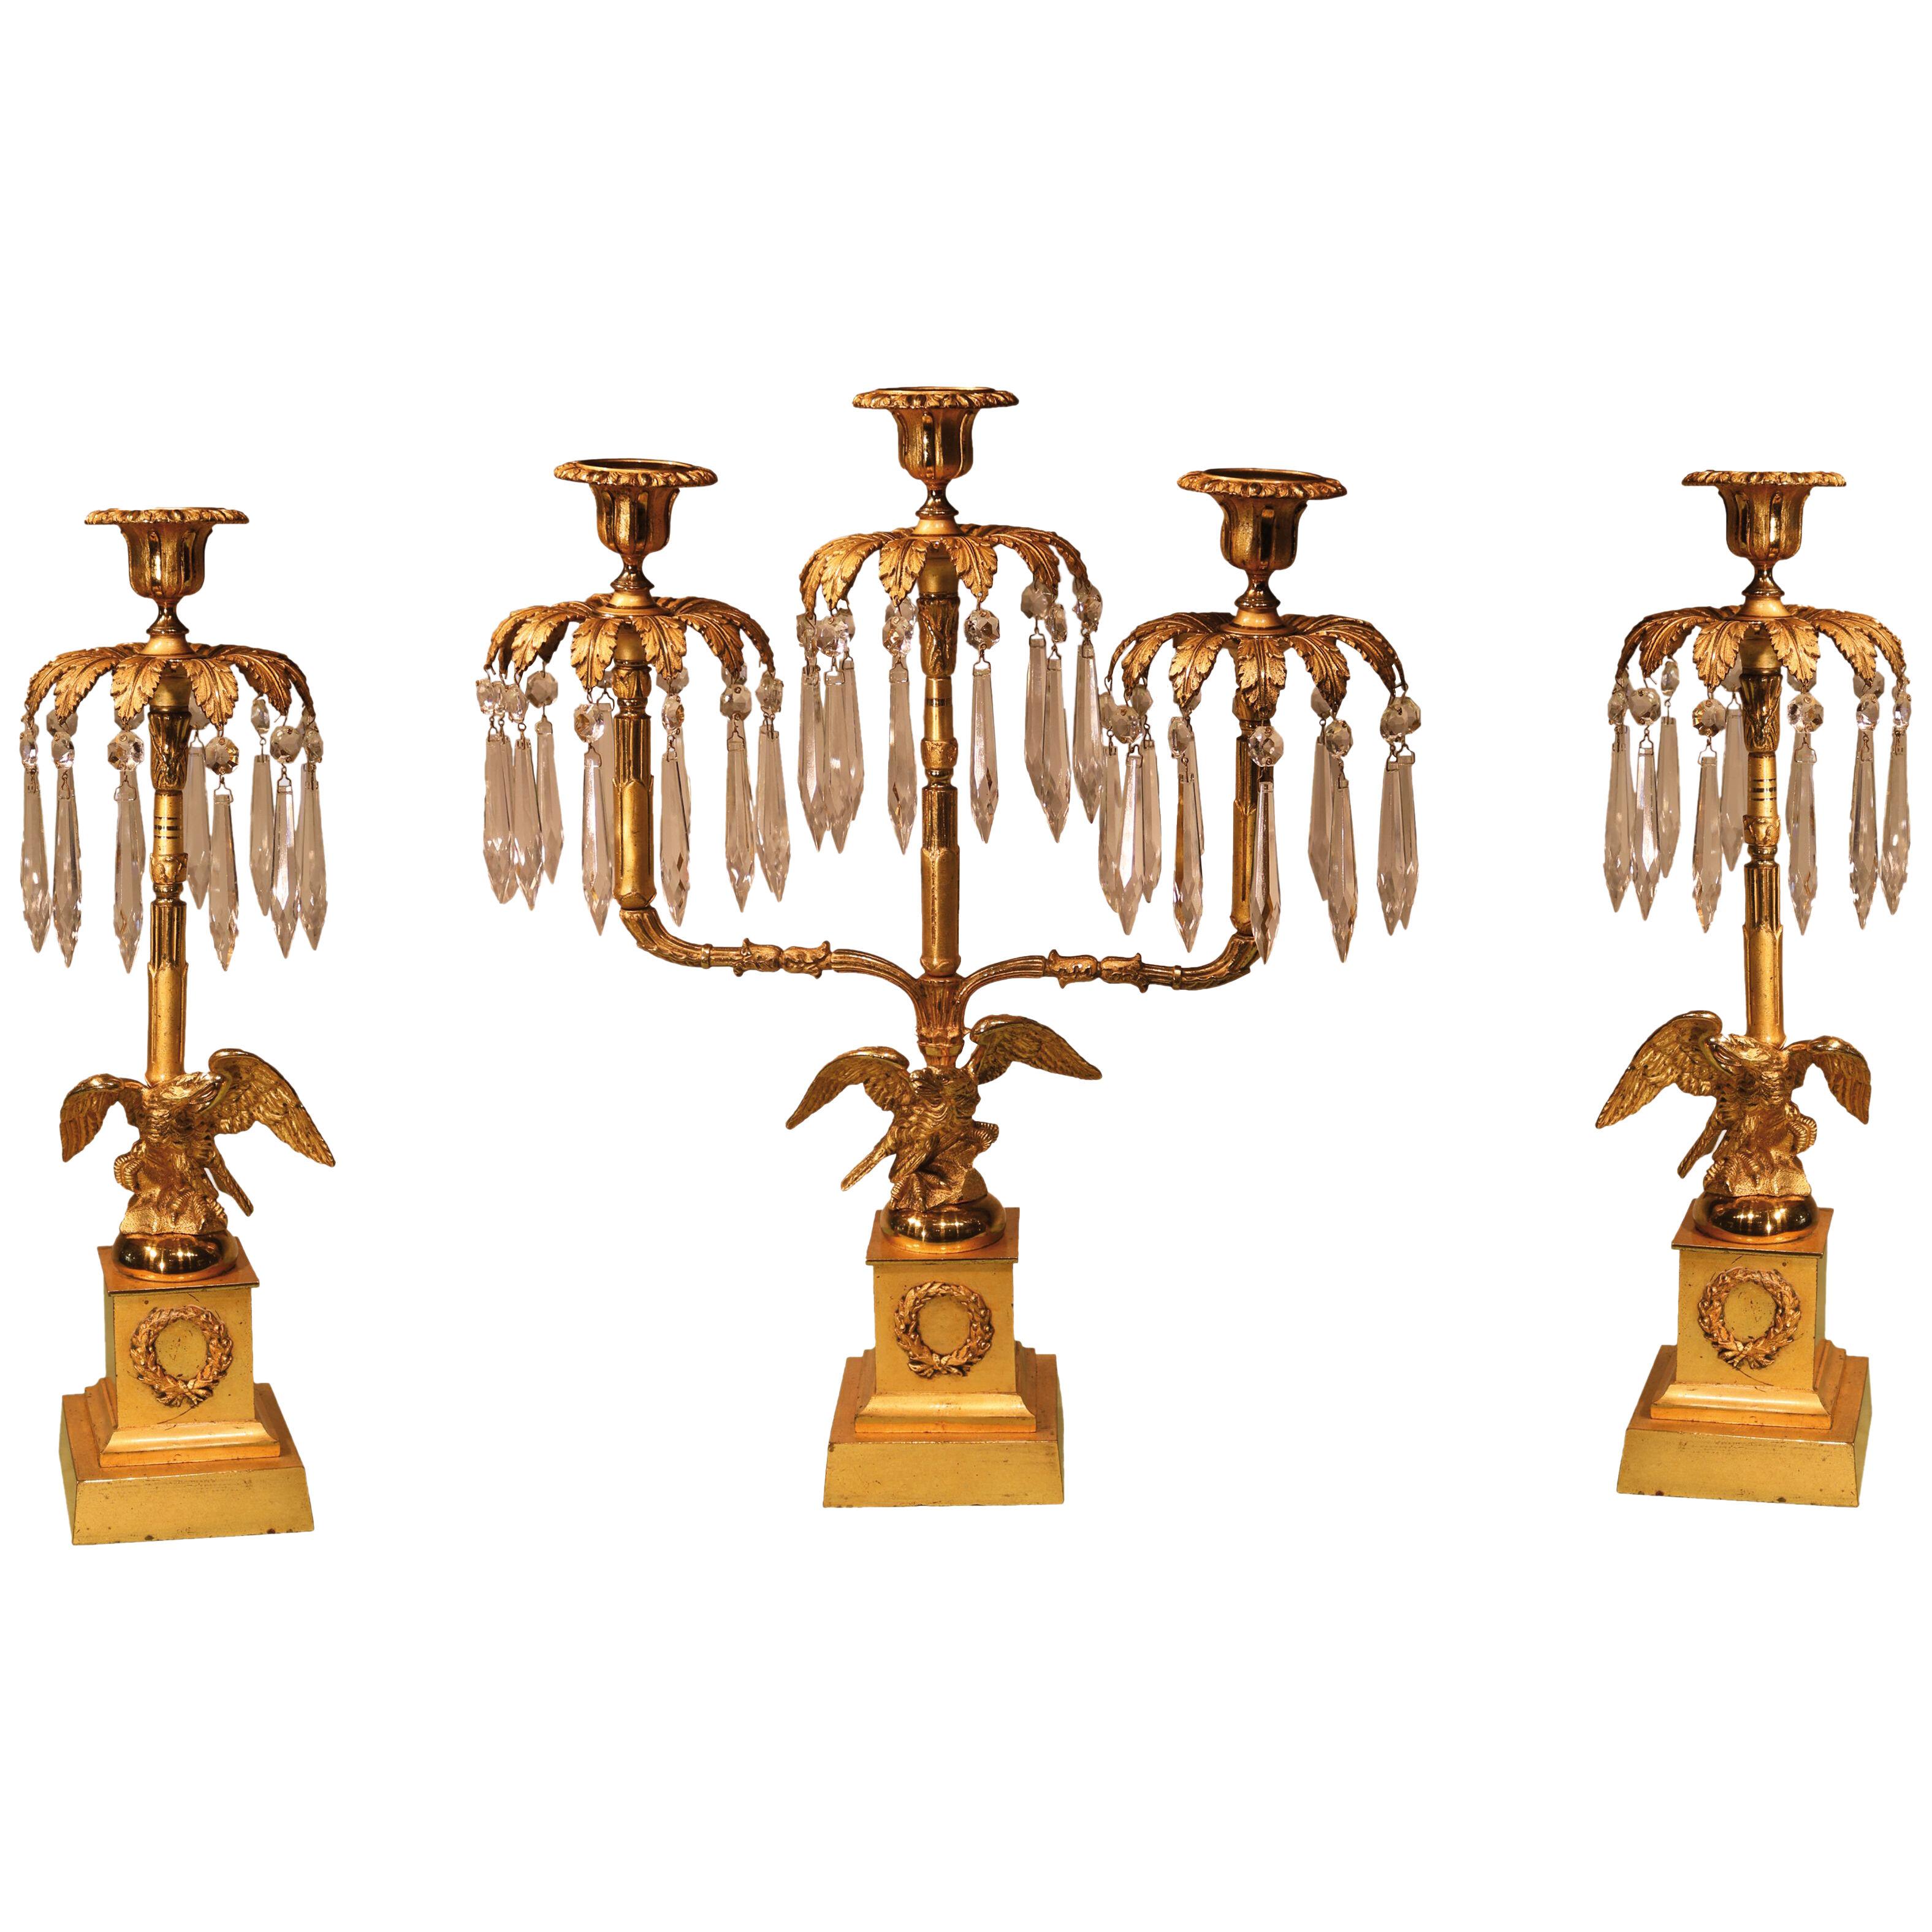 A set of three Regency period bronze and ormolu candlesticks